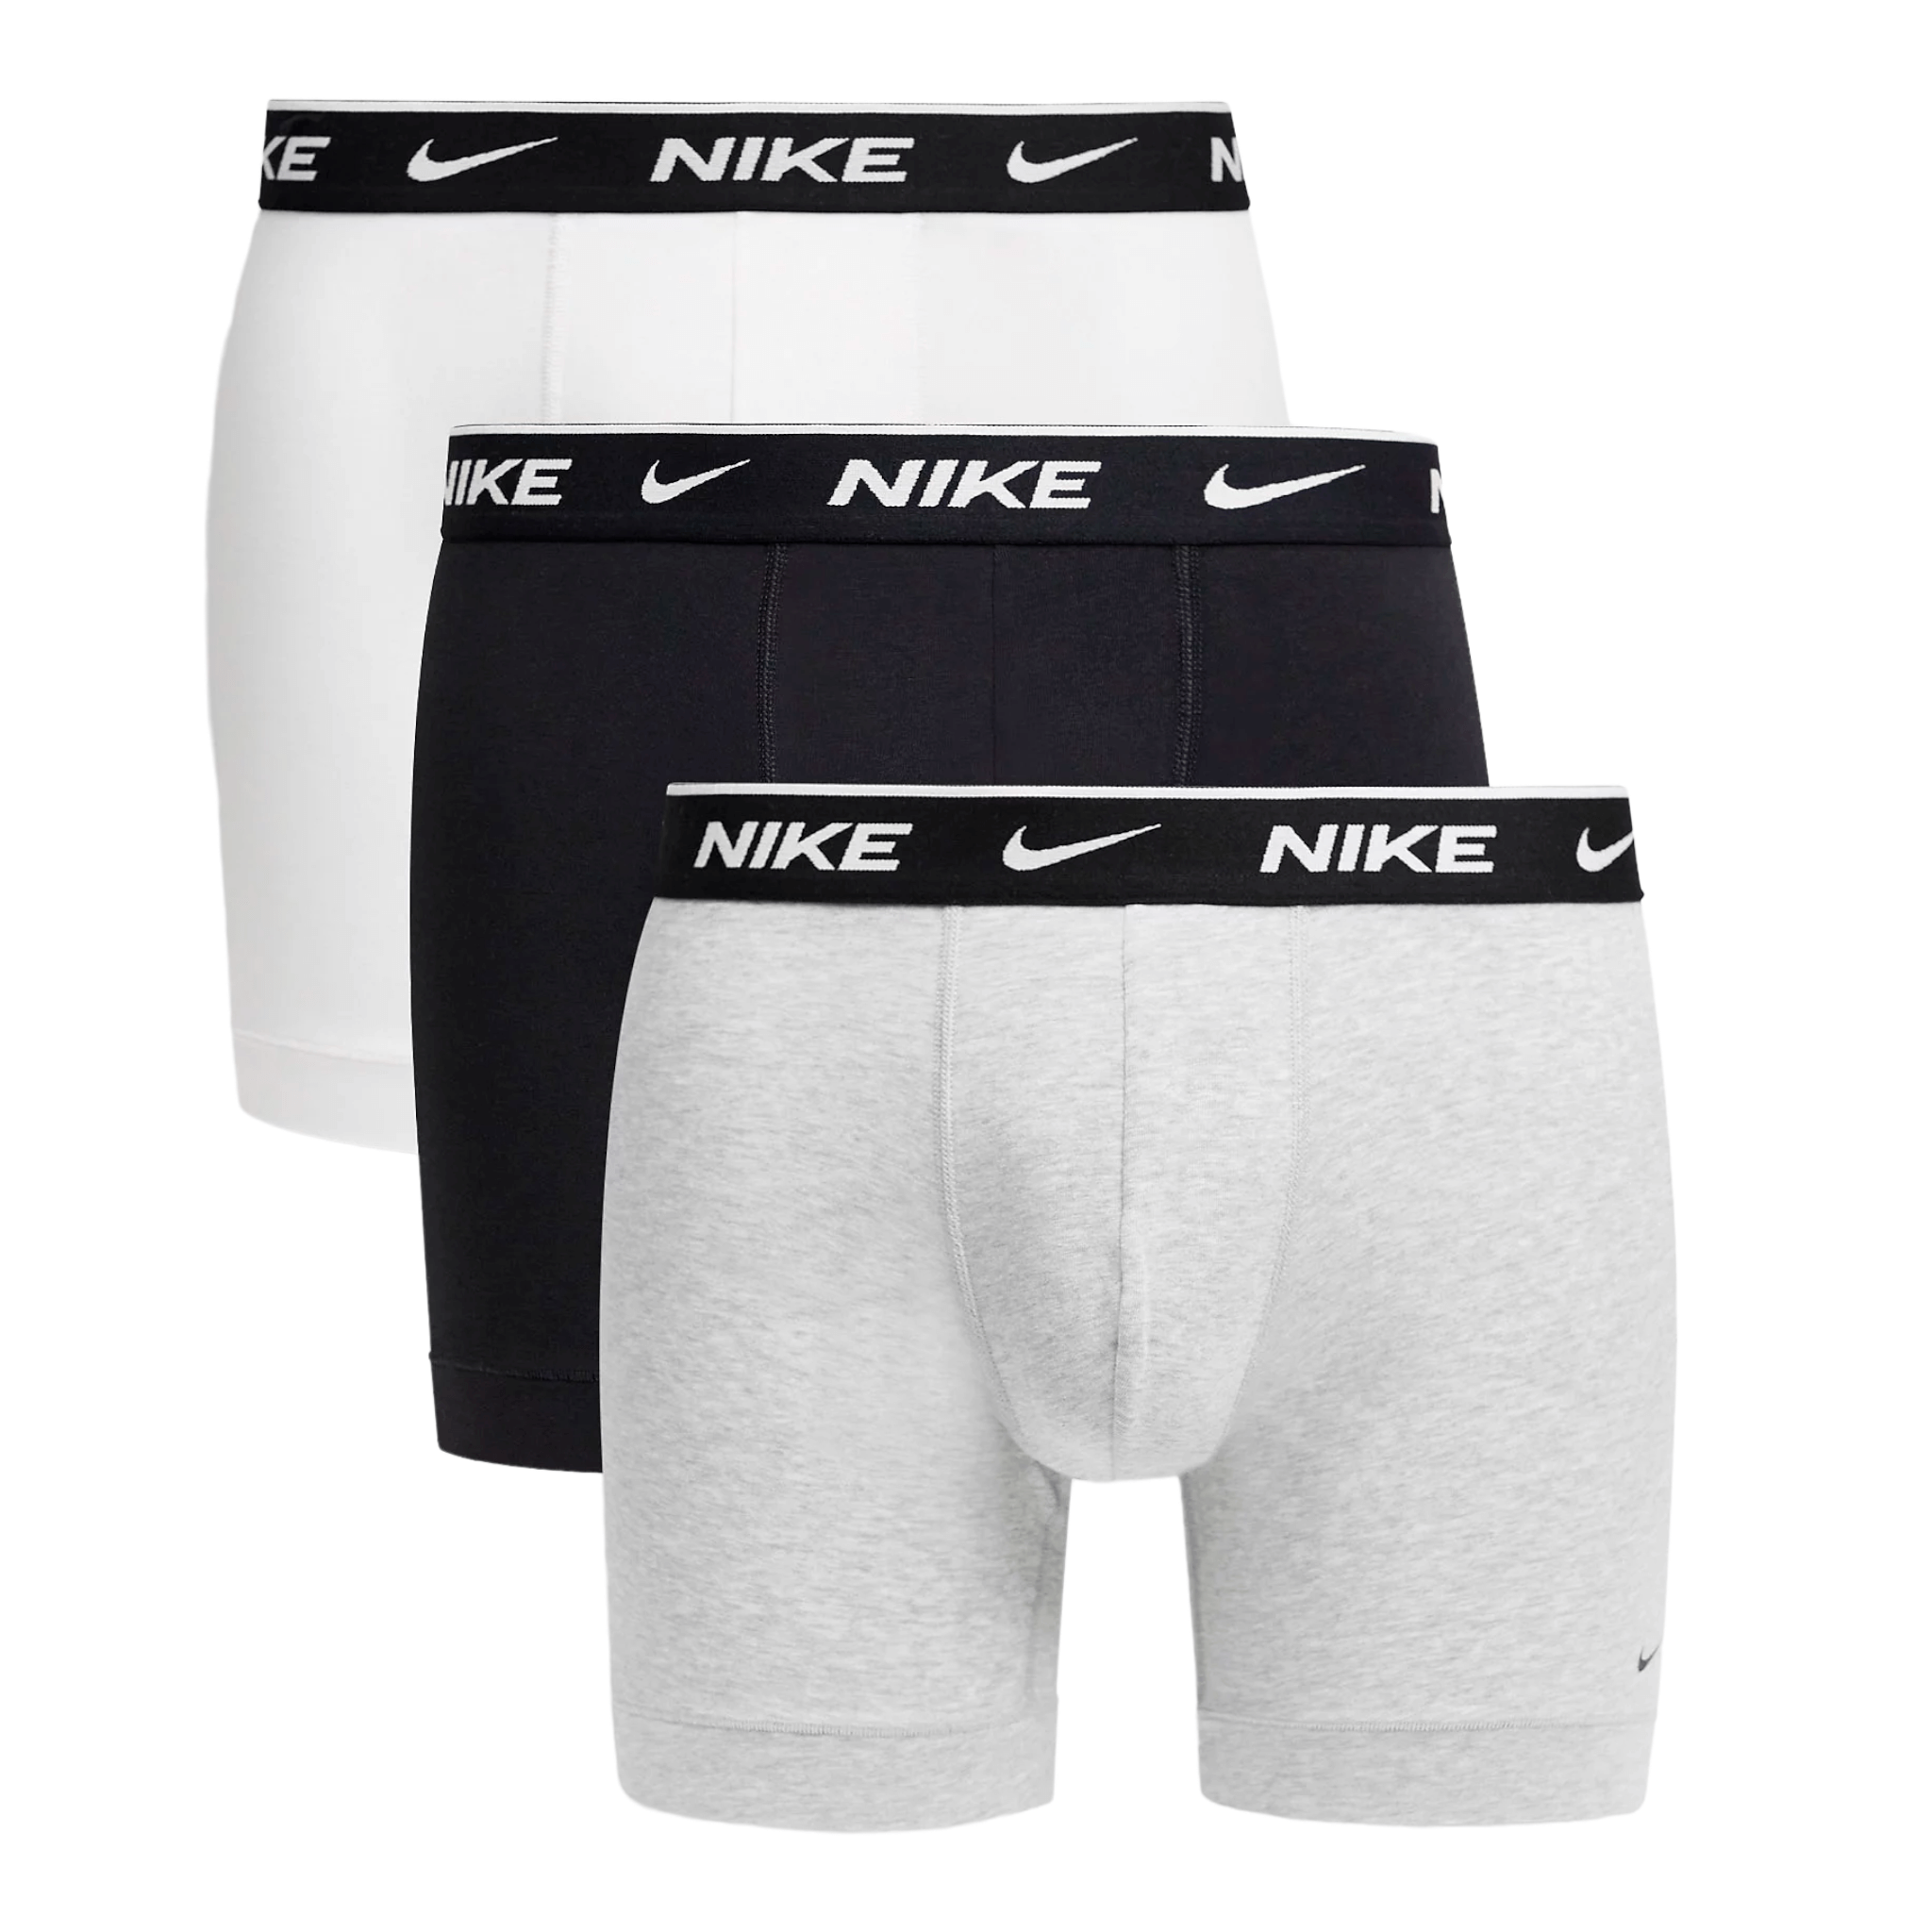 Трусы боксеры Nike Brief 3 Pack, 3 предмета, белый/черный/серый